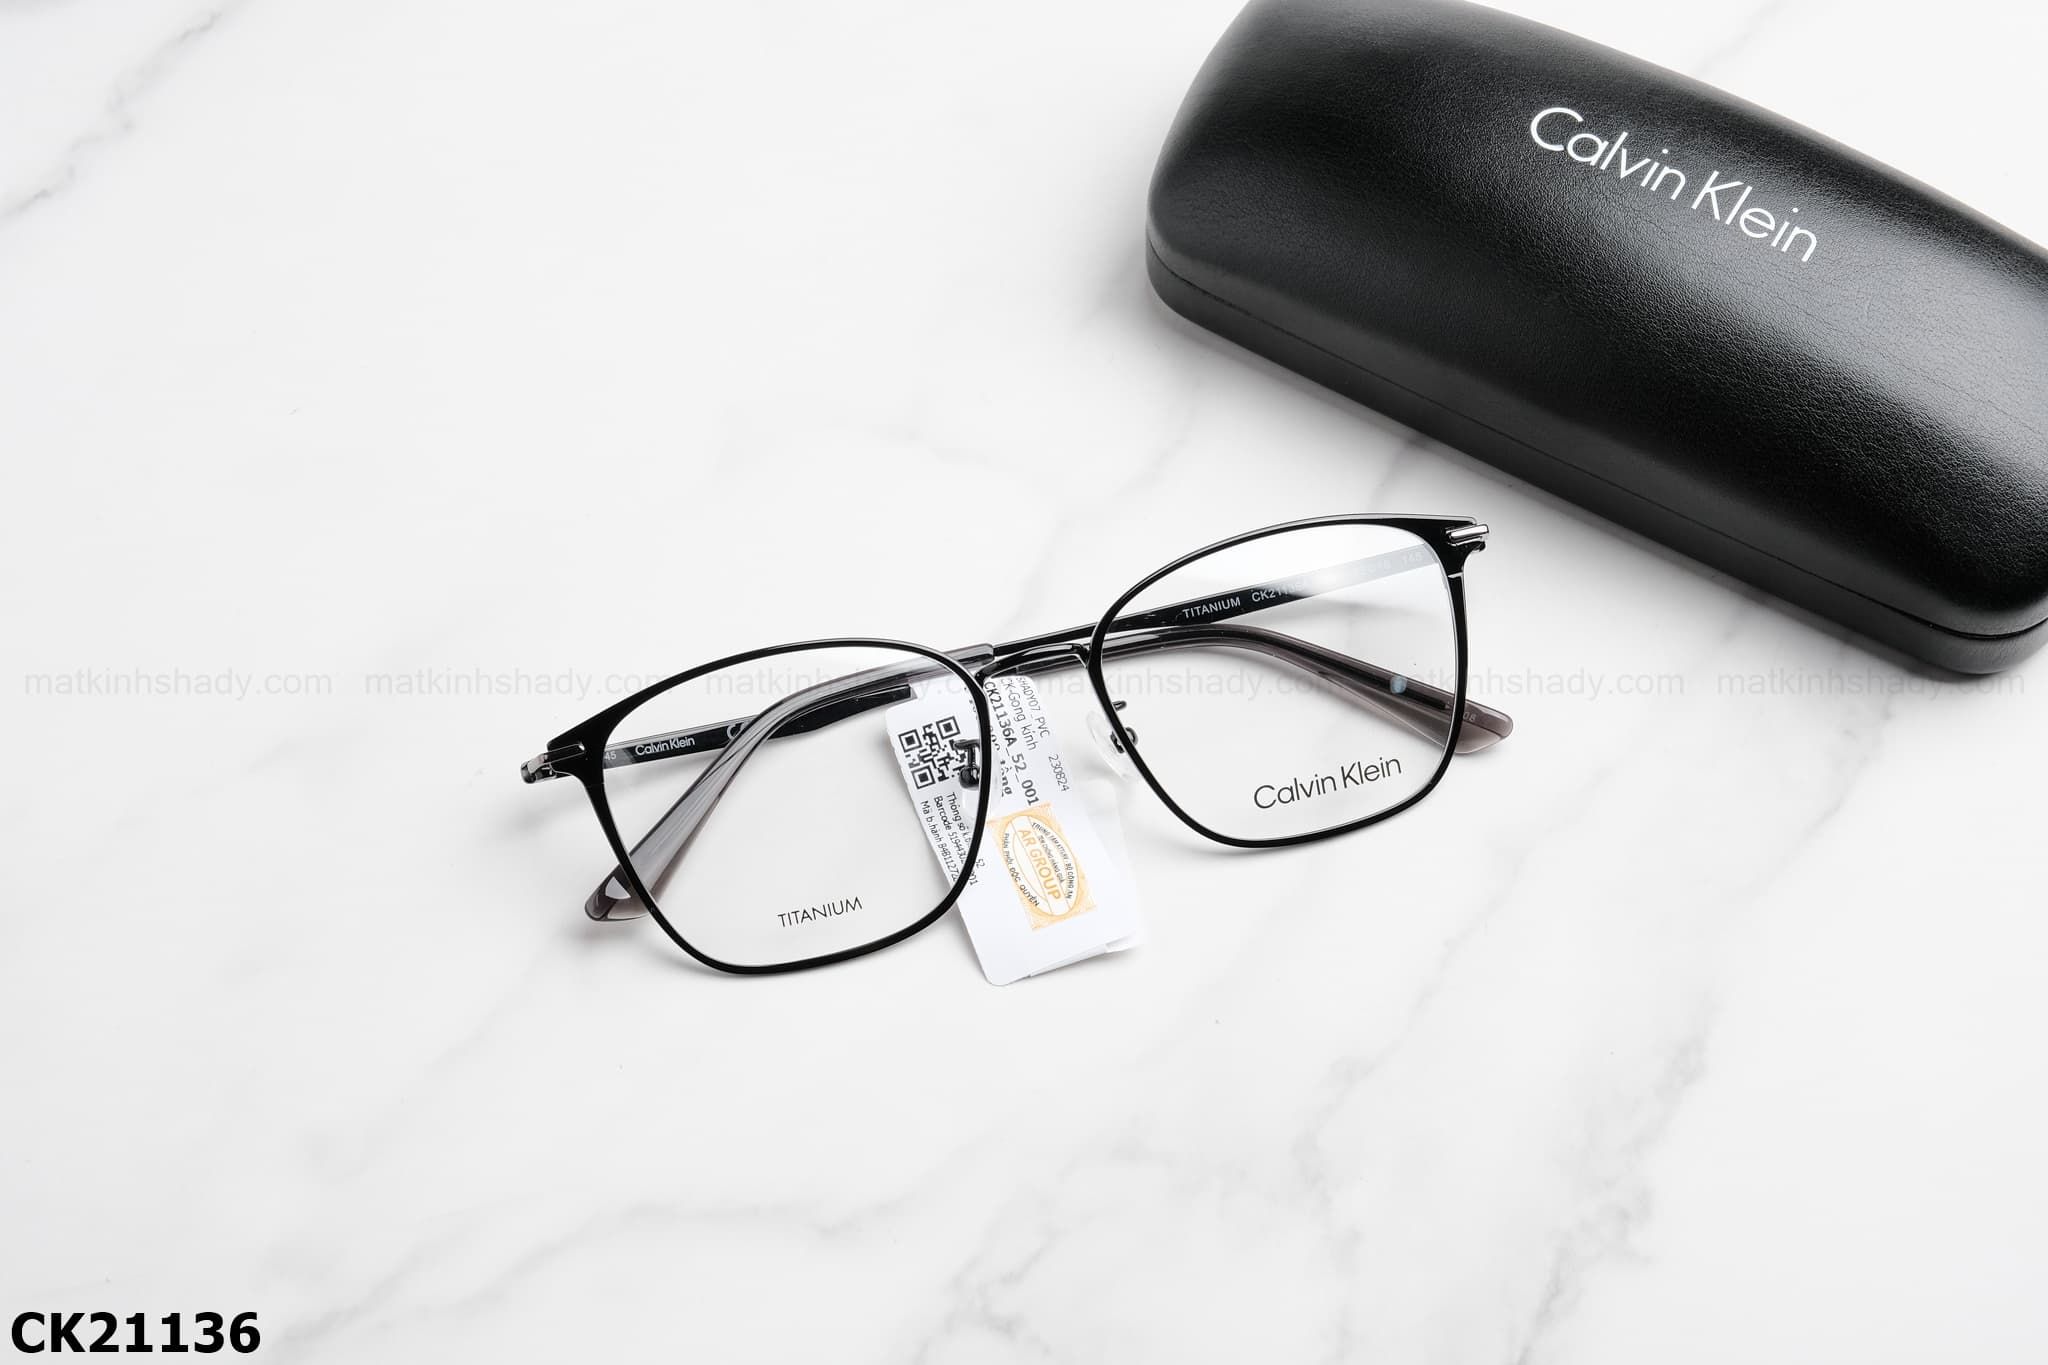  Calvin Klein Eyewear - Glasses - CK21136 